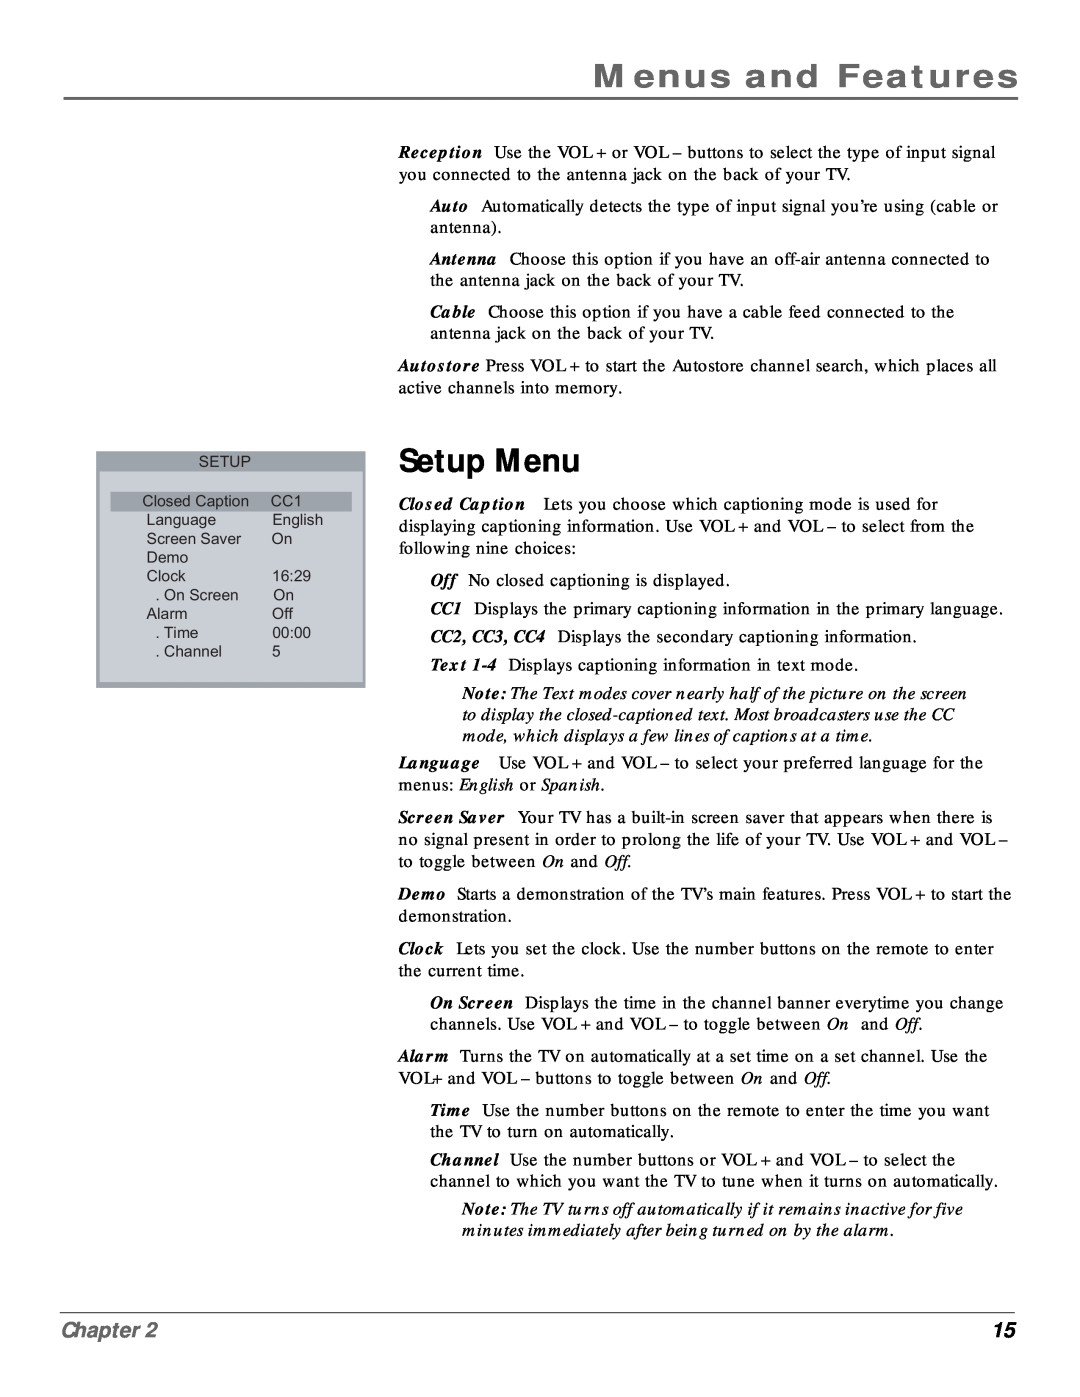 RCA CR20310 manual Setup Menu, Menus and Features, Chapter 